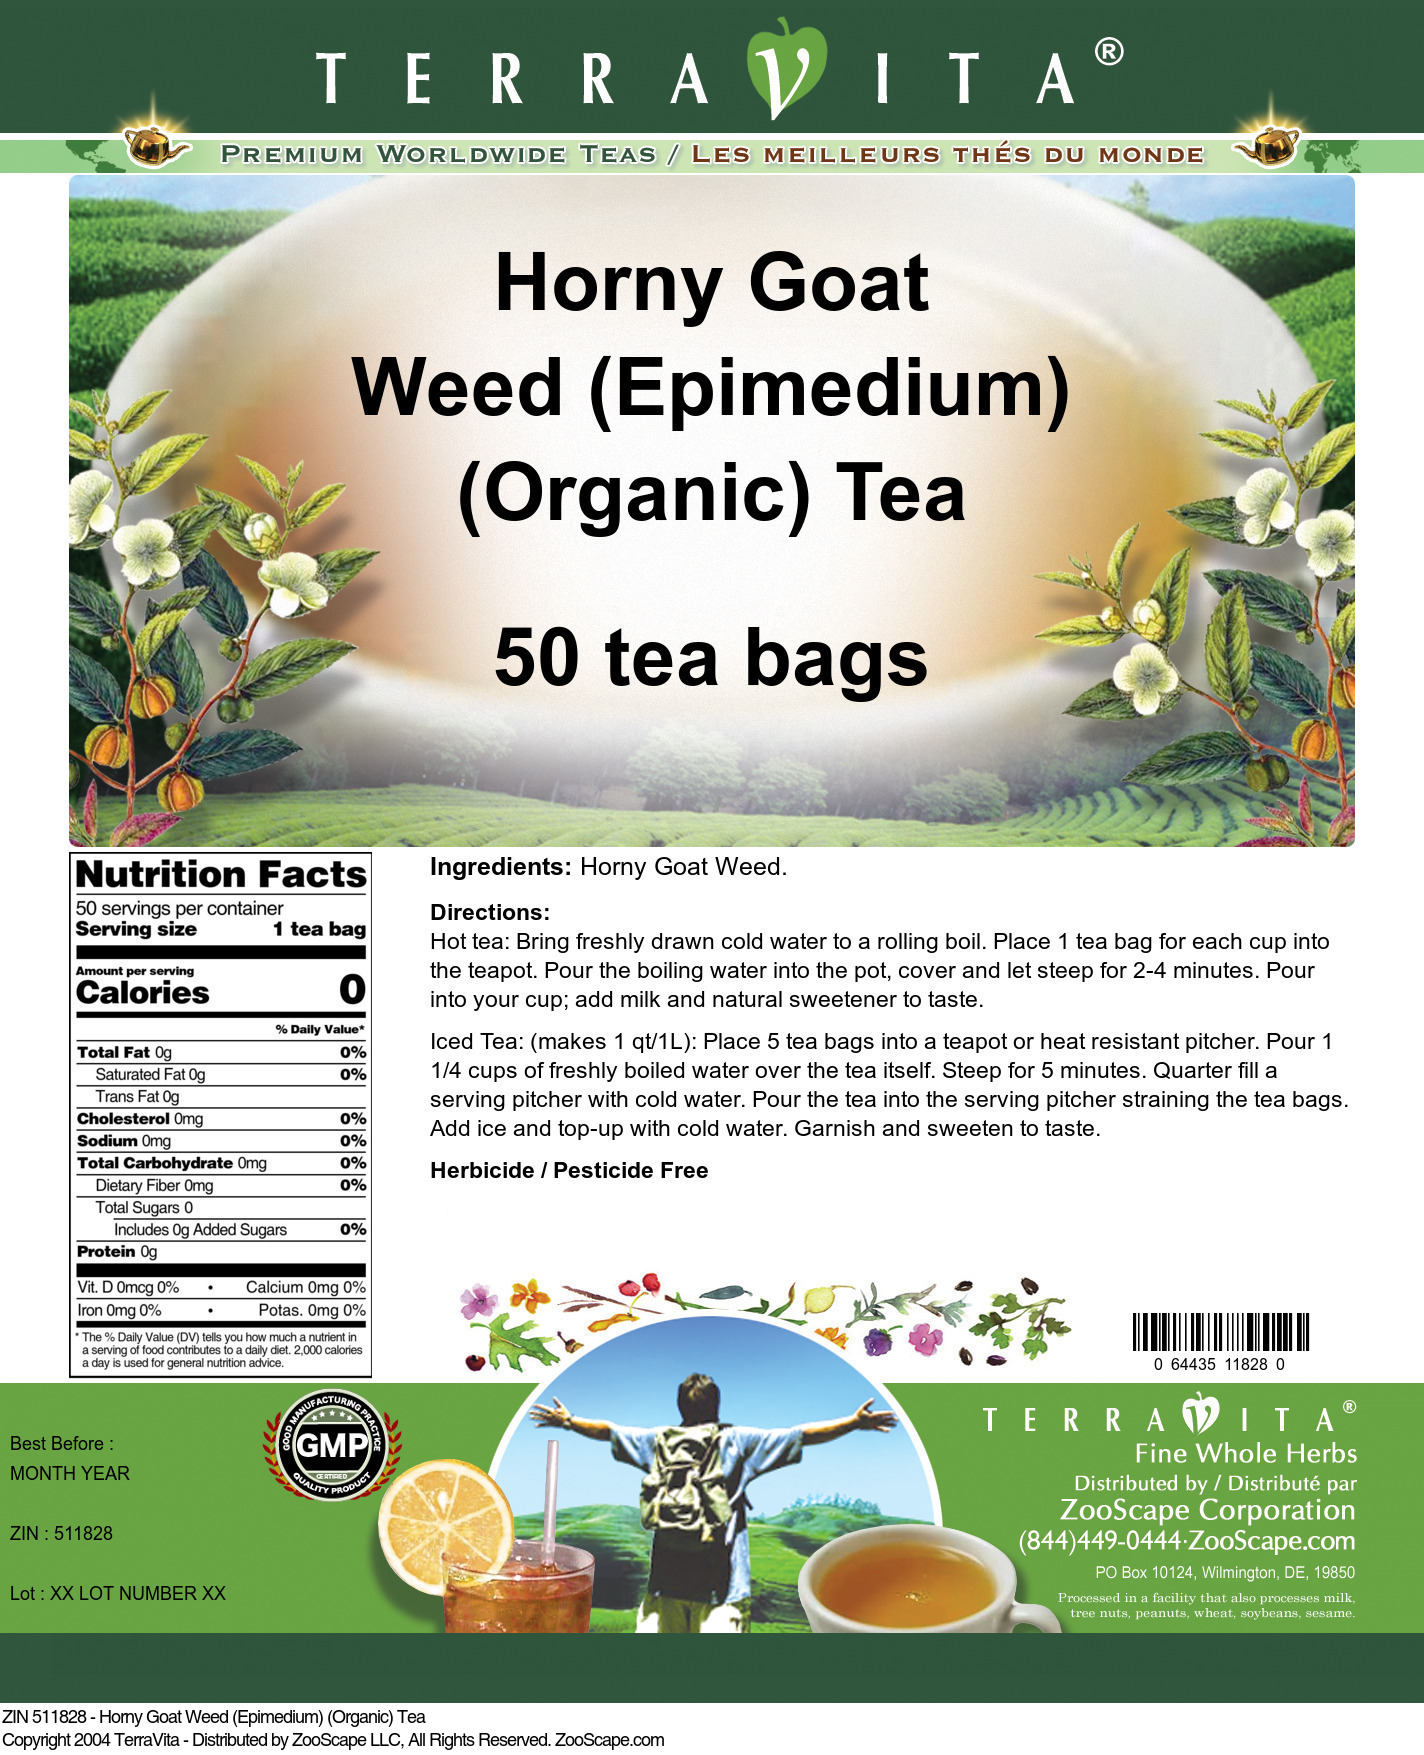 Horny Goat Weed (Epimedium) (Organic) Tea - Label